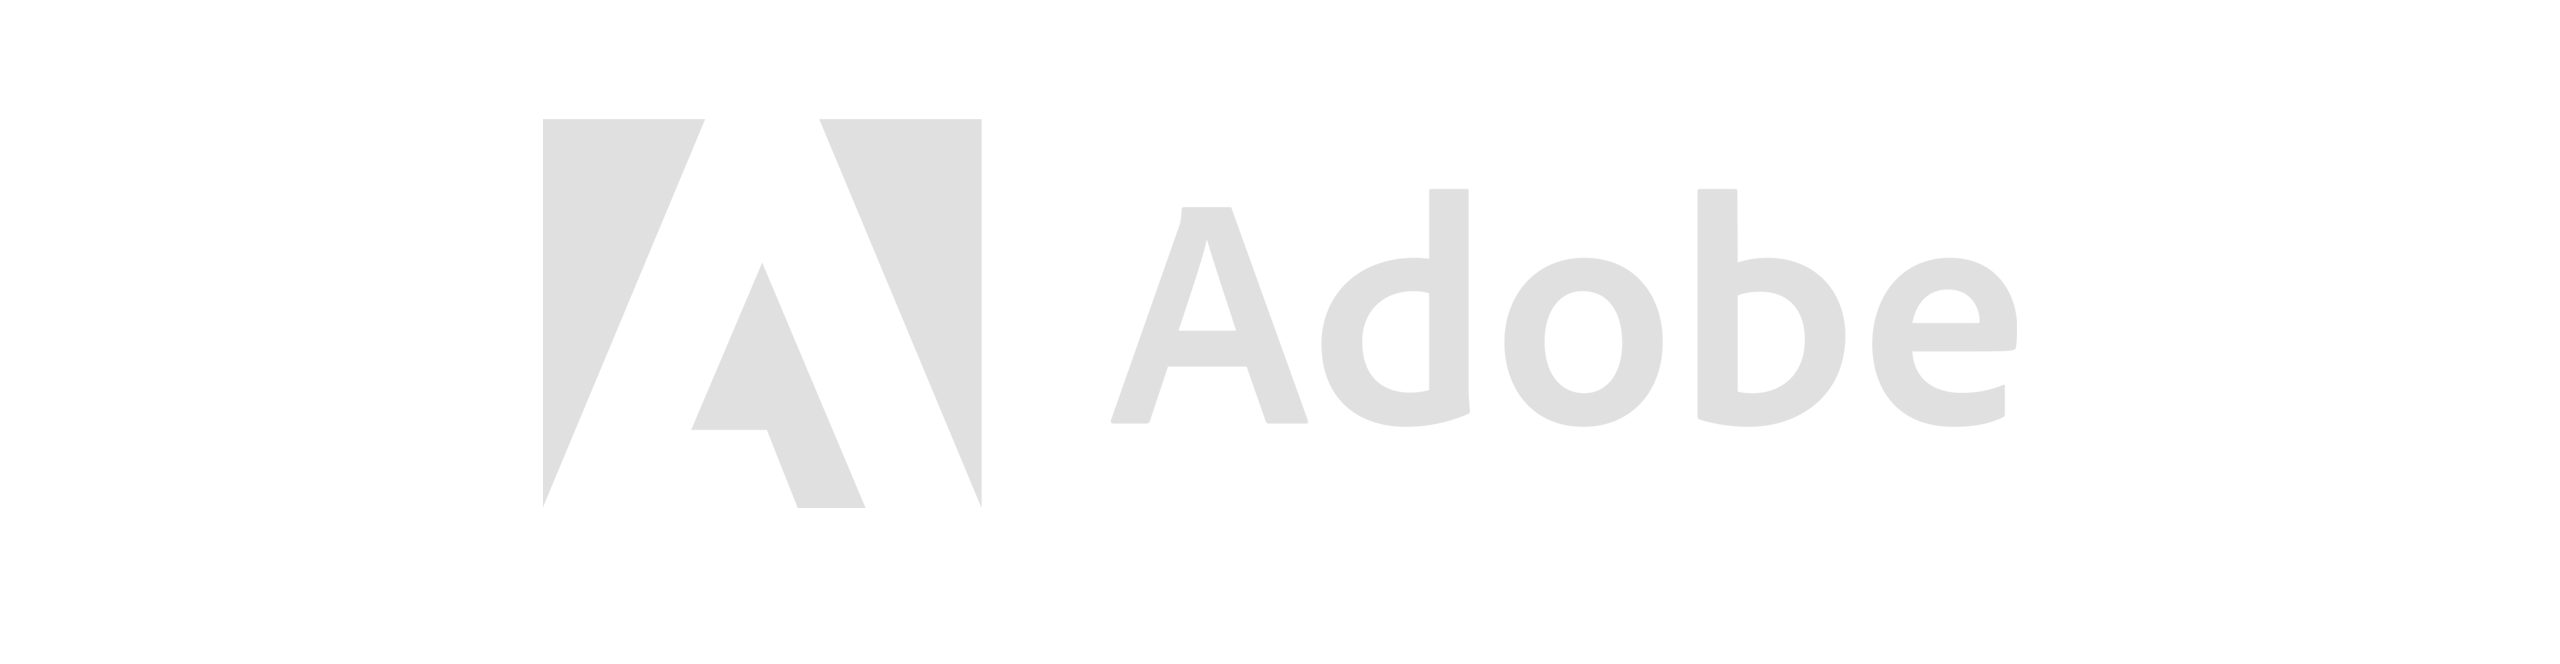 Adobe_Corporate_logo.svg